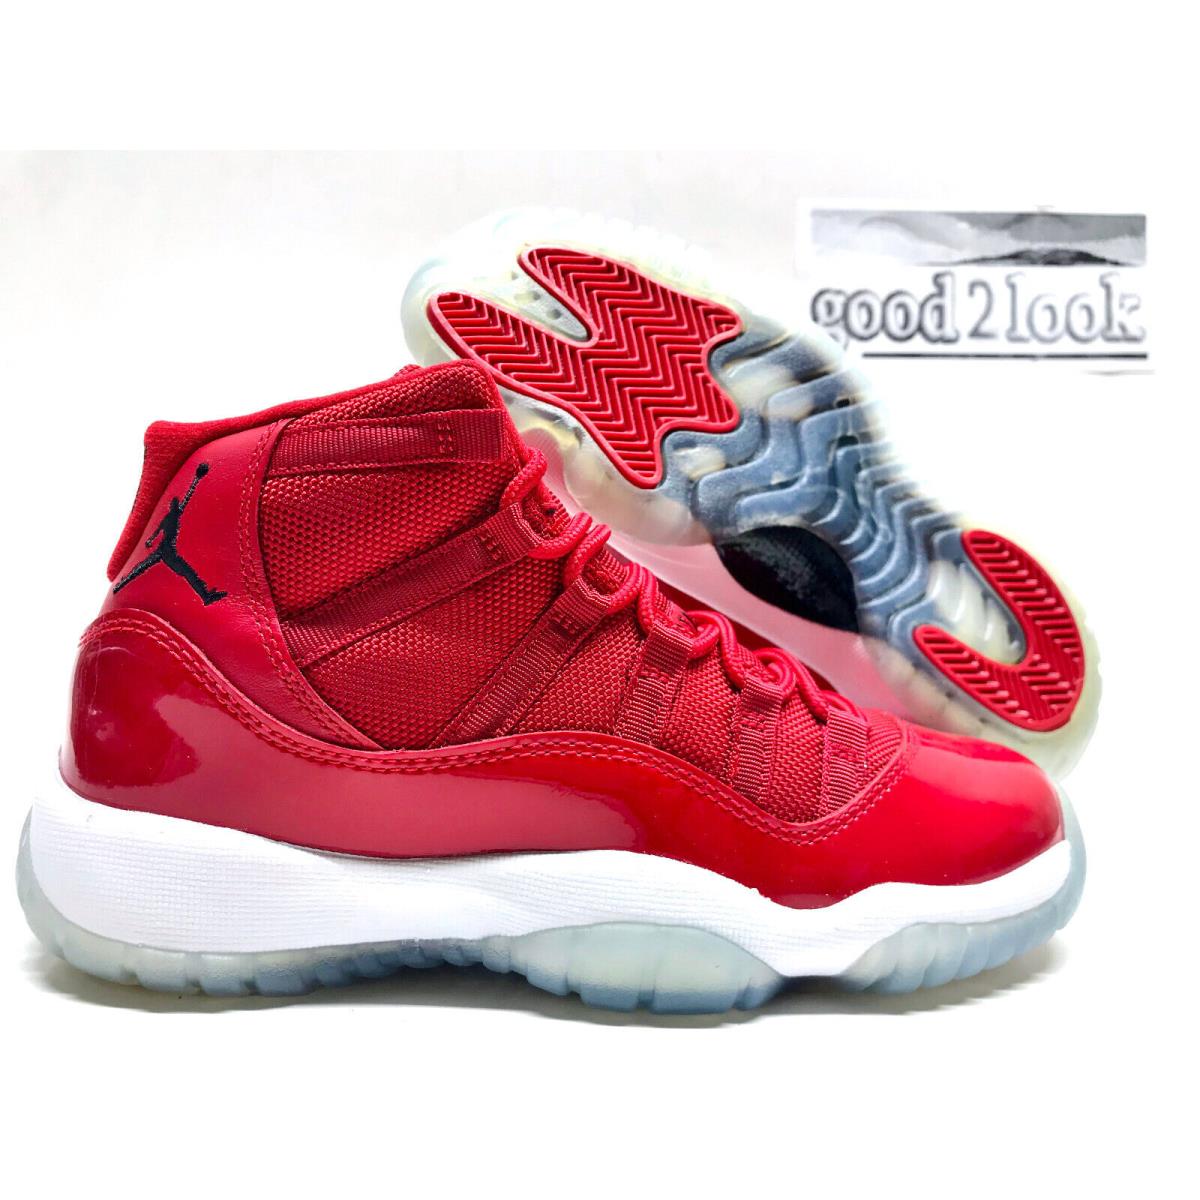 Nike Air Jordan 11 Retro BG Win Like 96 Gym Red Size 4Y/WOMEN`S 5.5 378038-623